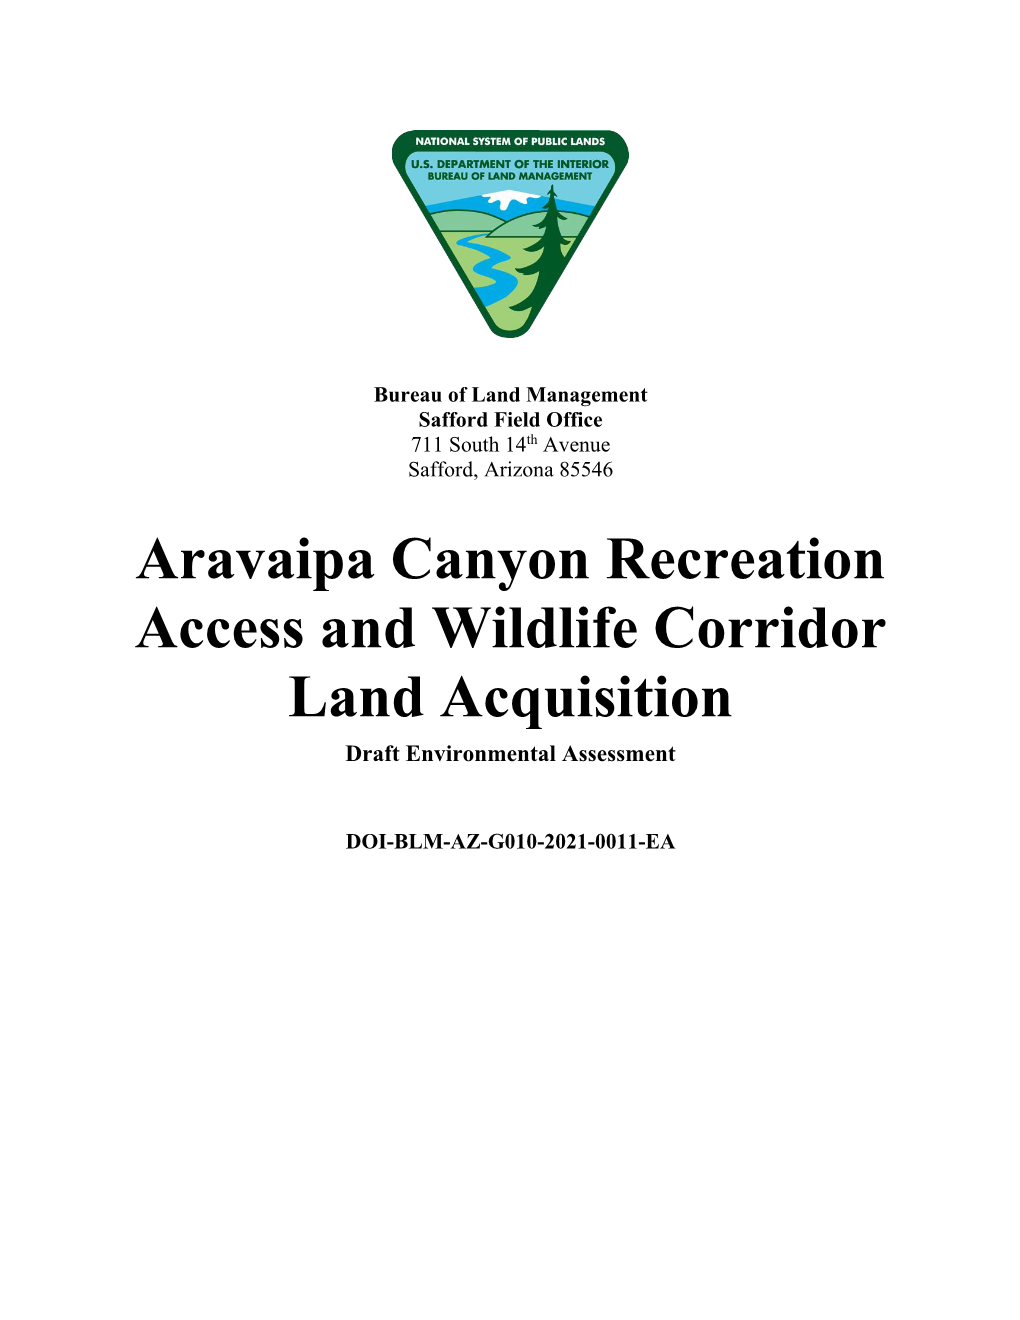 Draft Aravaipa Canyon Recreation Access and Wildlife Corridor Land